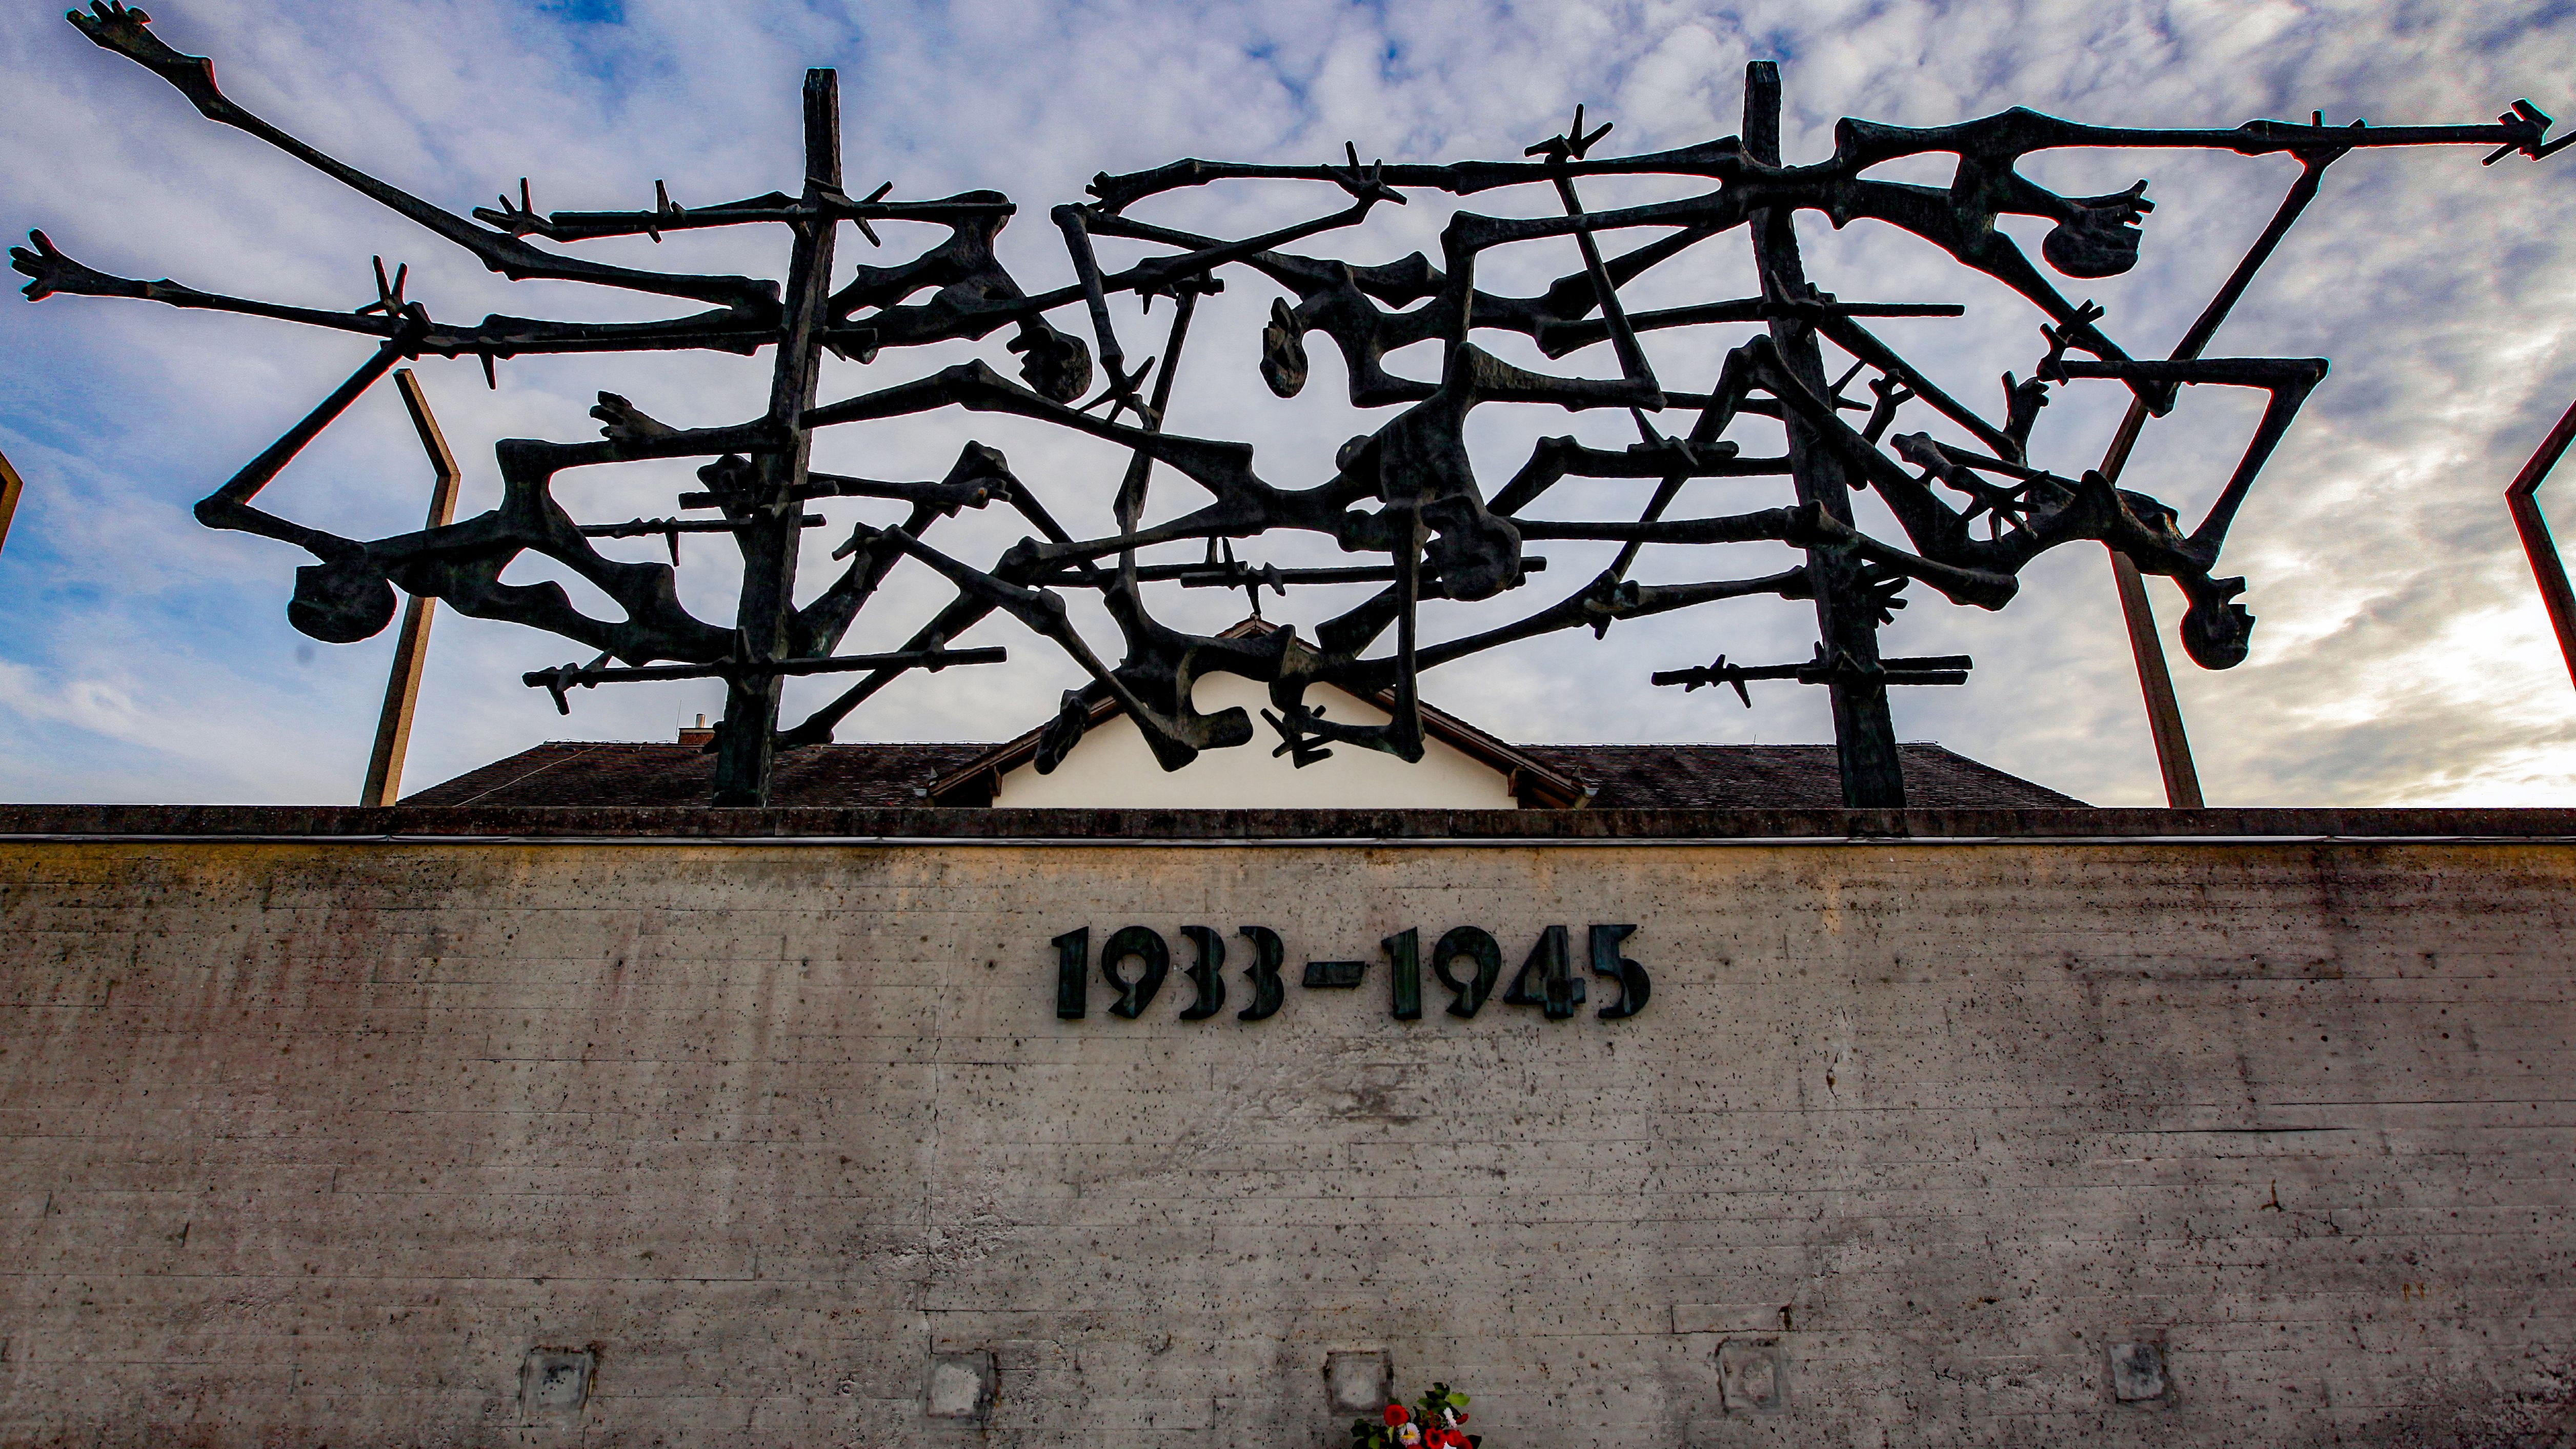 International Monument, Dachau Concentration Camp Memorial Site